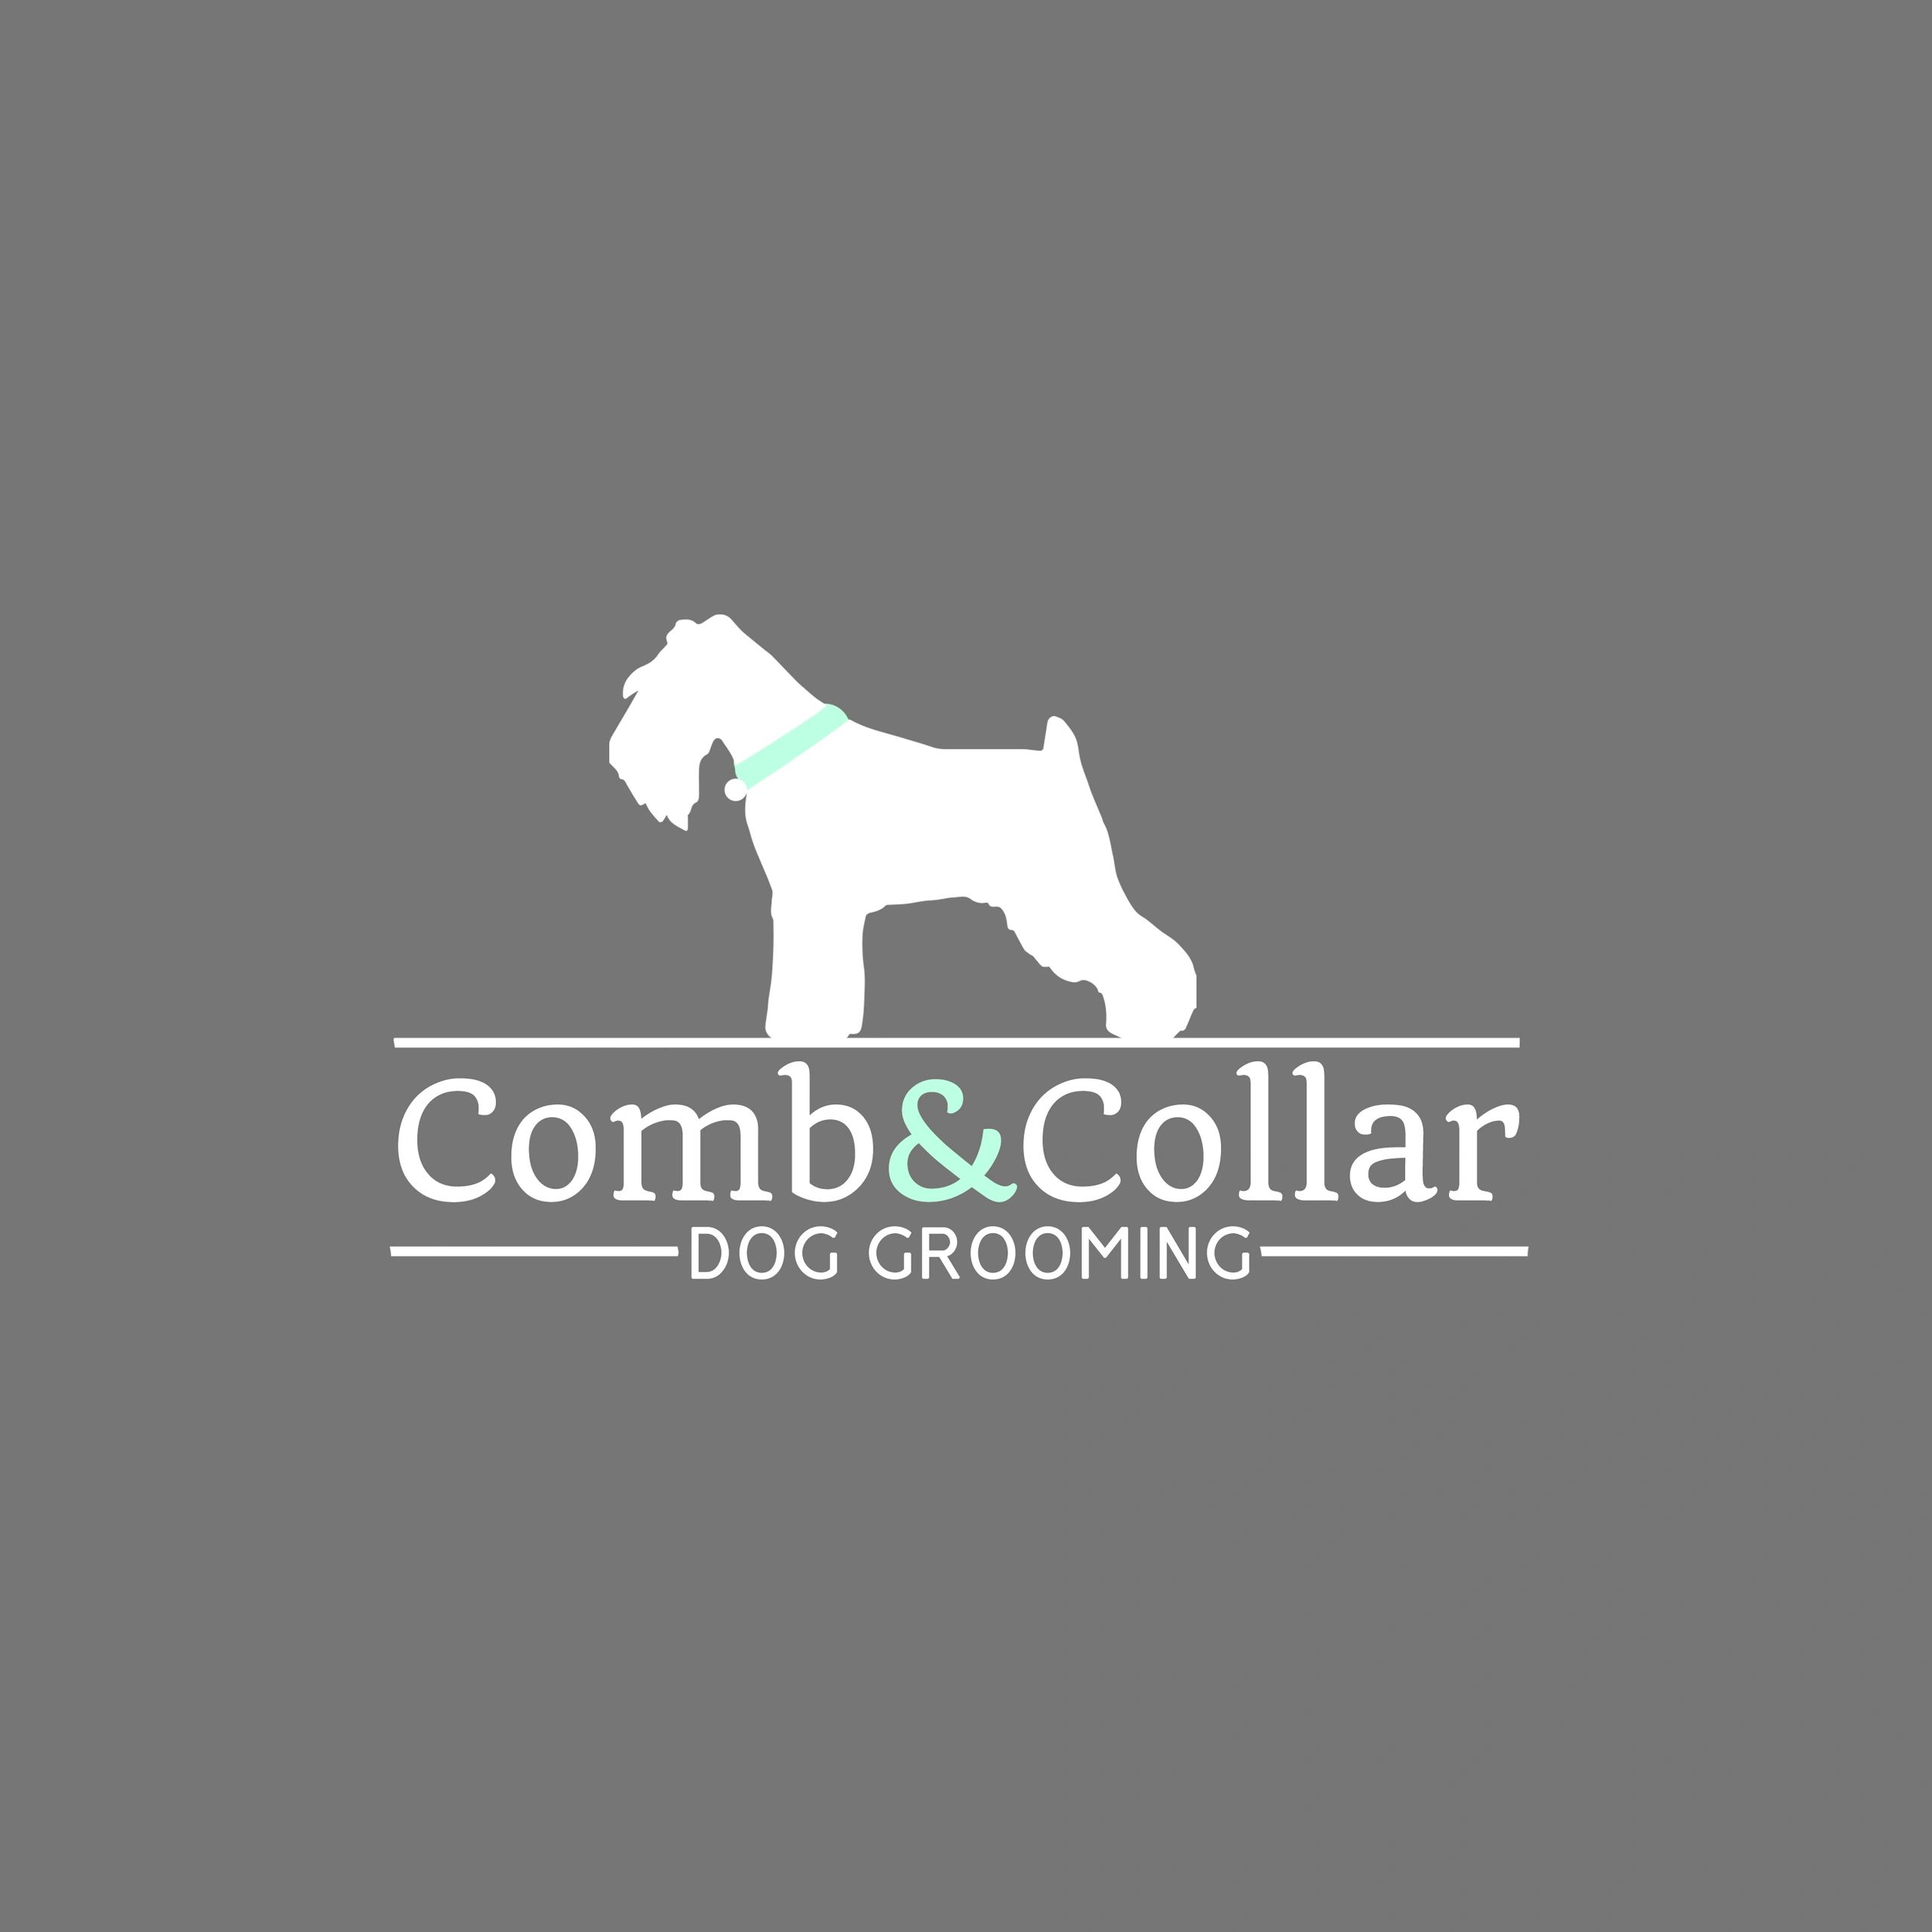 Comb&Collar Dog Grooming